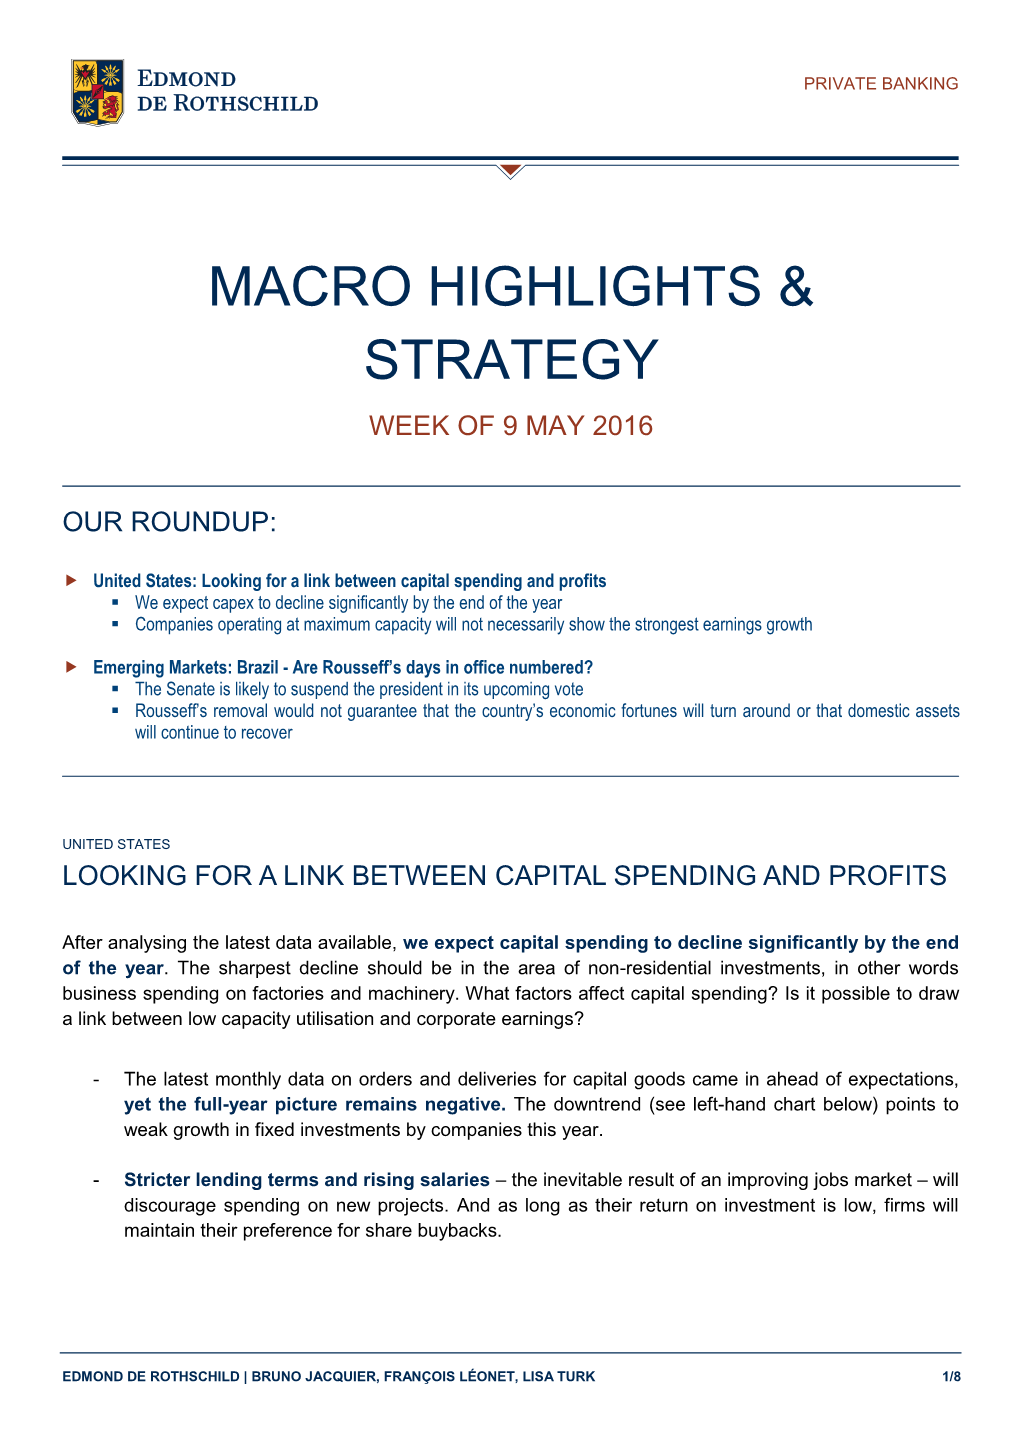 Macro Highlights & Strategy